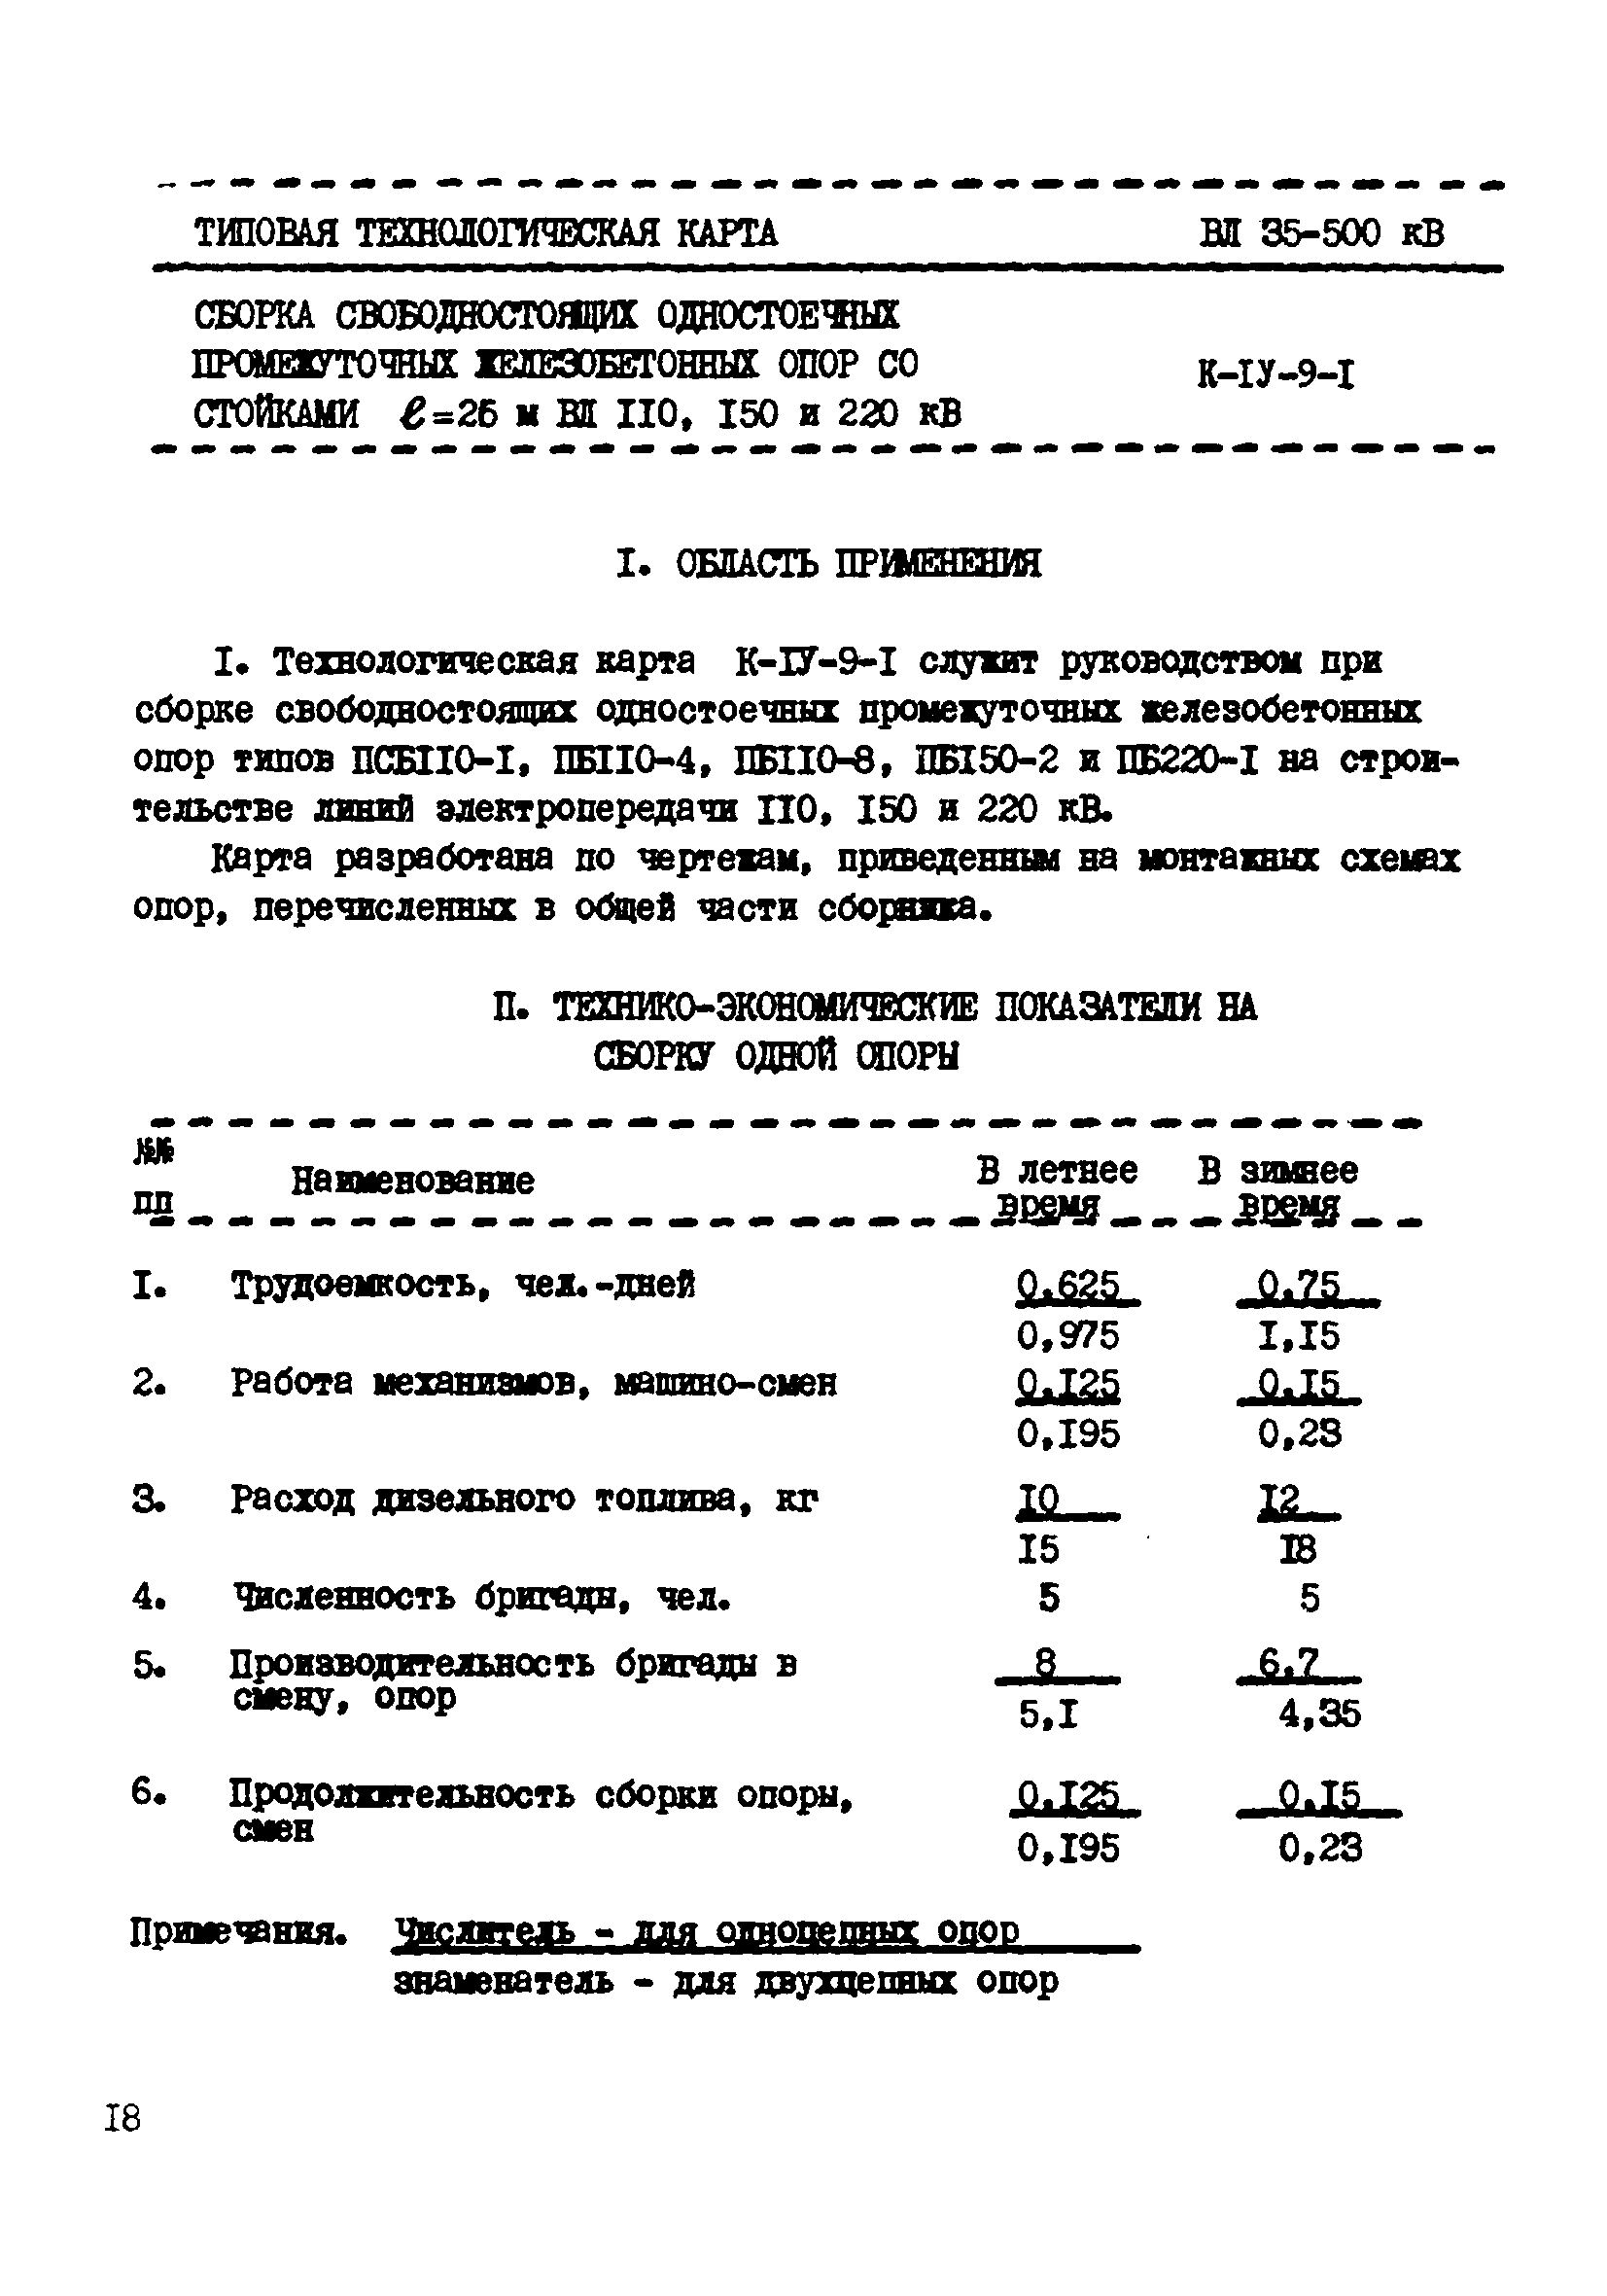 ТТК К-IV-9-1